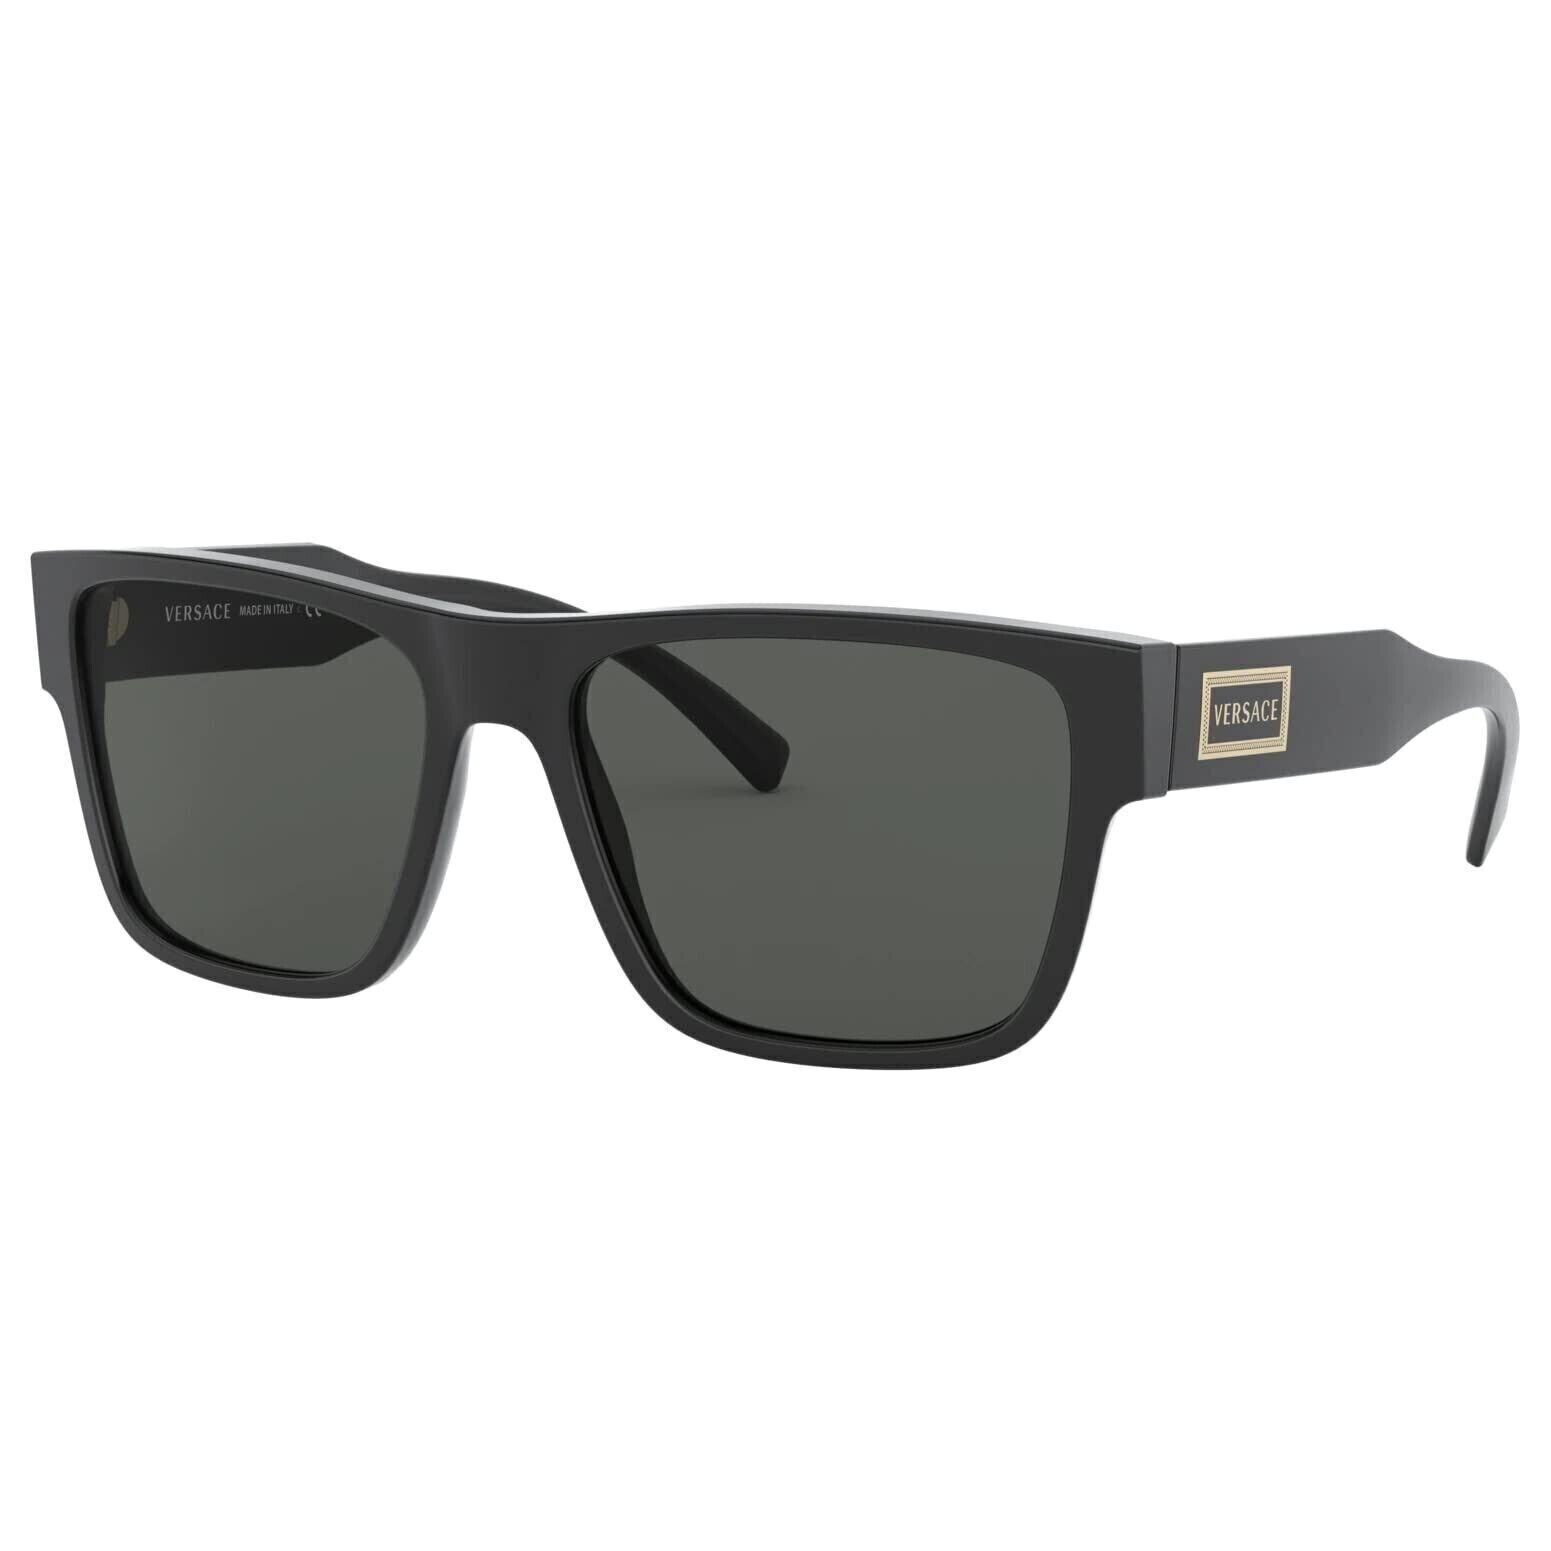 Versace VE4379 Black/Grey Sunglasses